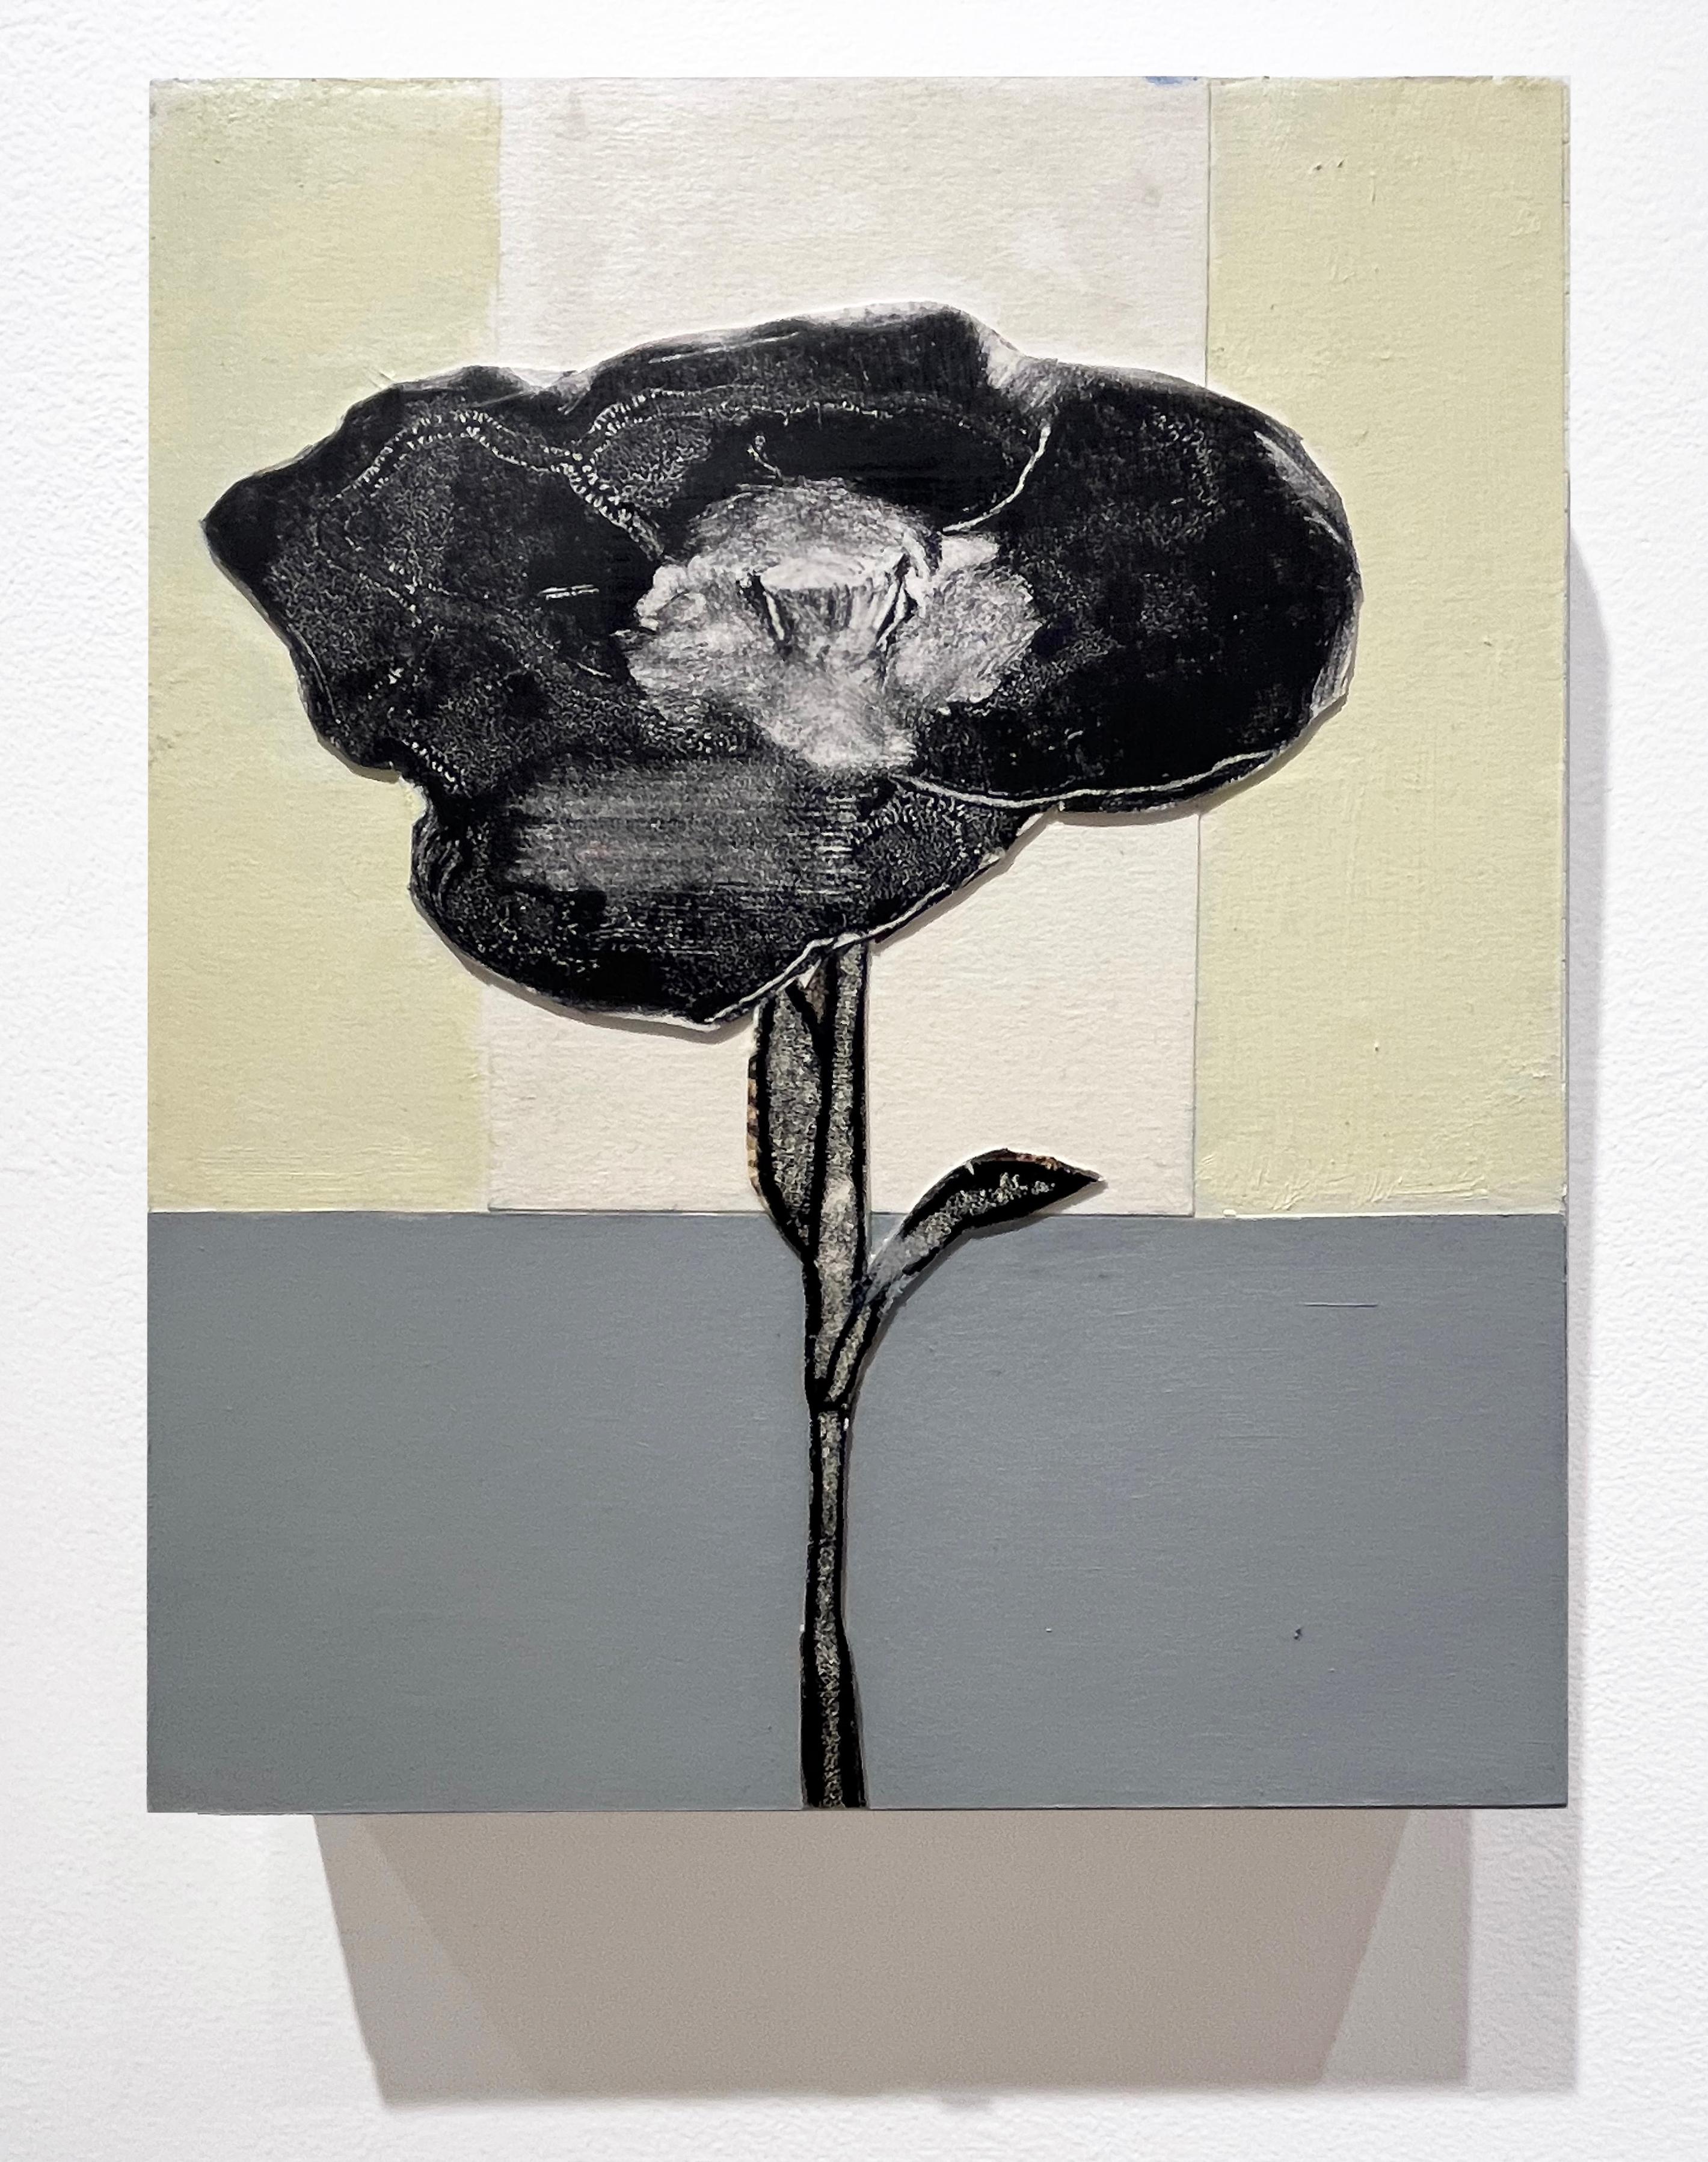 Black Poppy (Small Still Life Painting, Flower on a Striped Pastel Background) - Contemporary Mixed Media Art by David Konigsberg